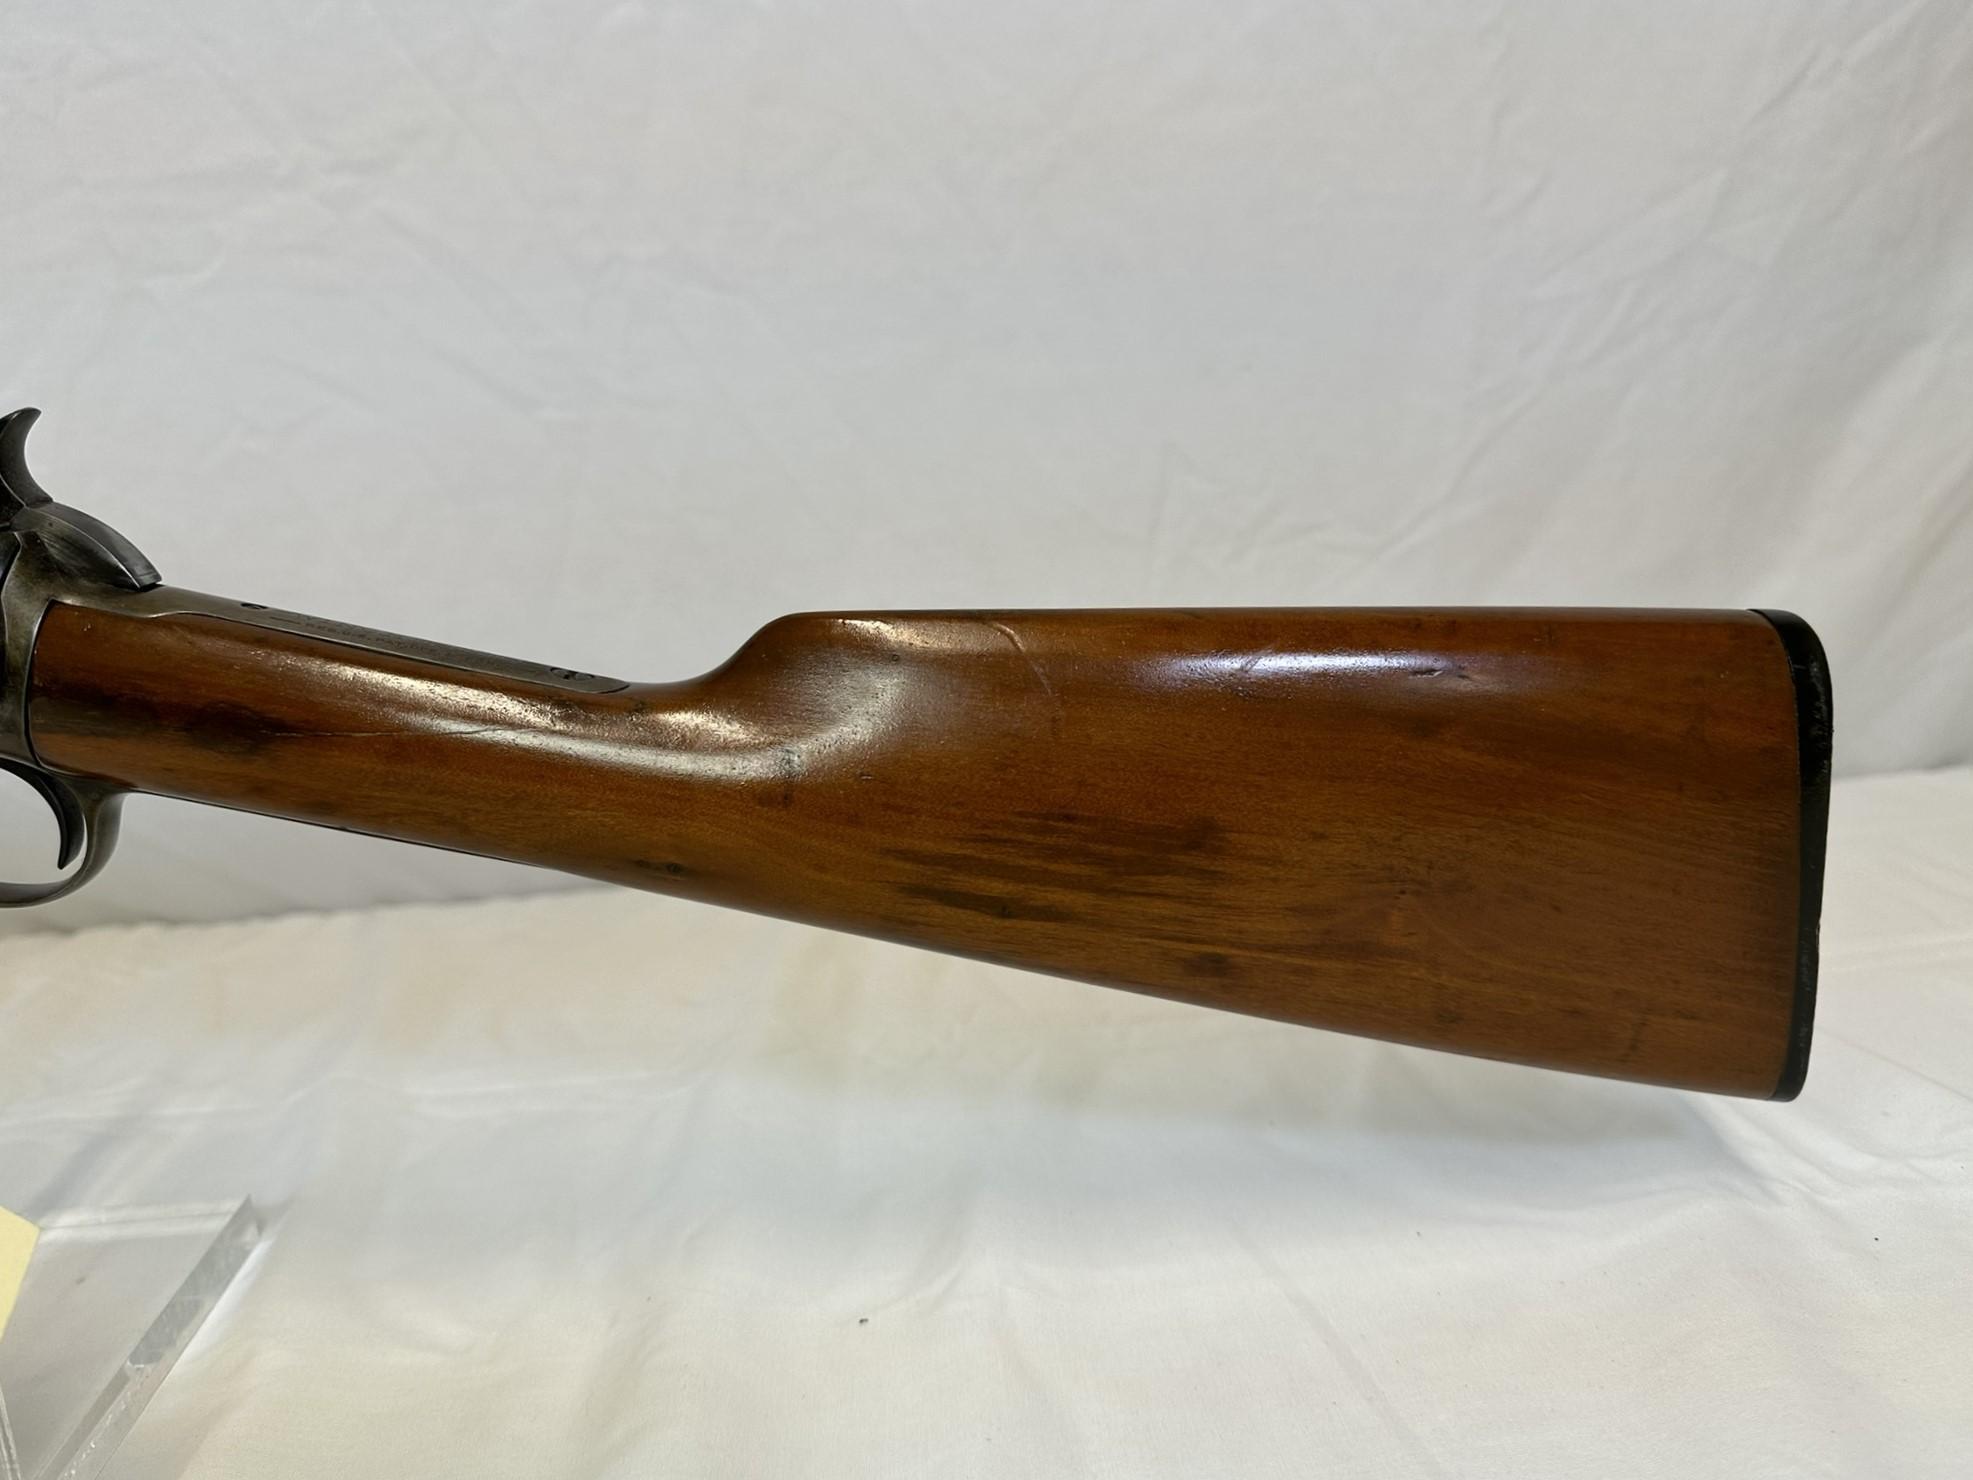 Winchester mod 1906 22LR pump action rifle